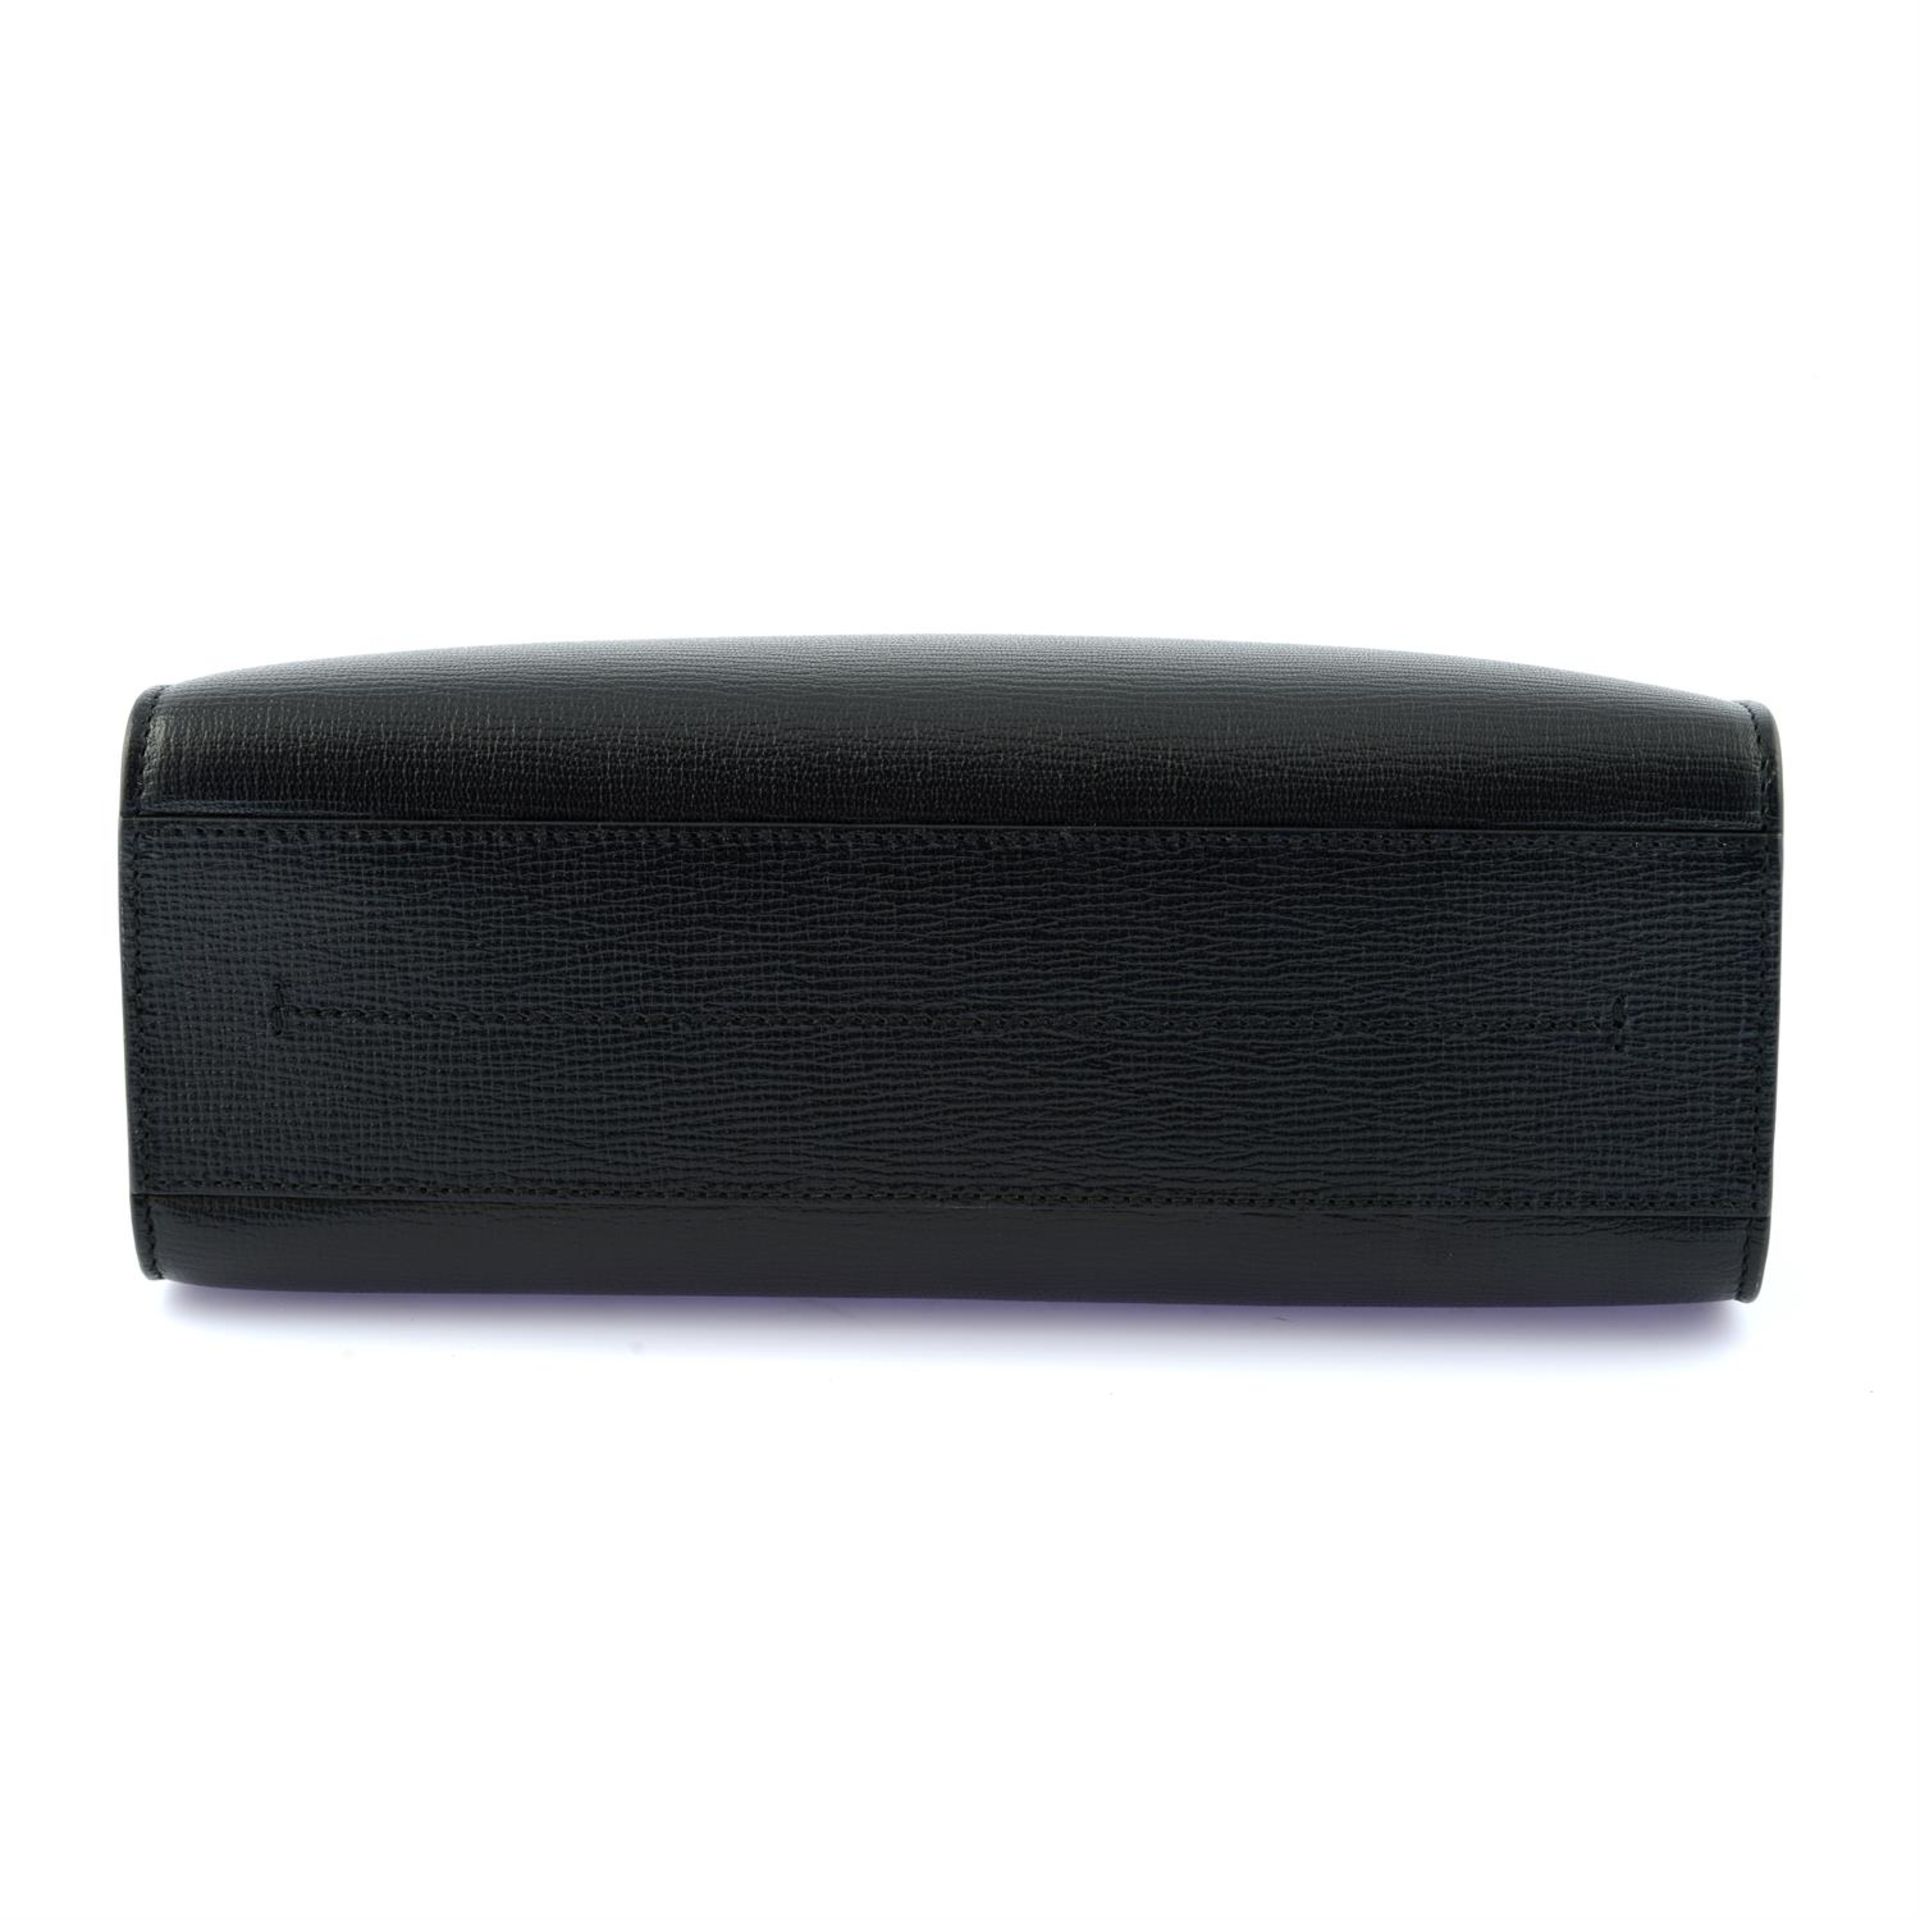 ANYA HINDMARCH - a black leather handbag. - Image 4 of 5